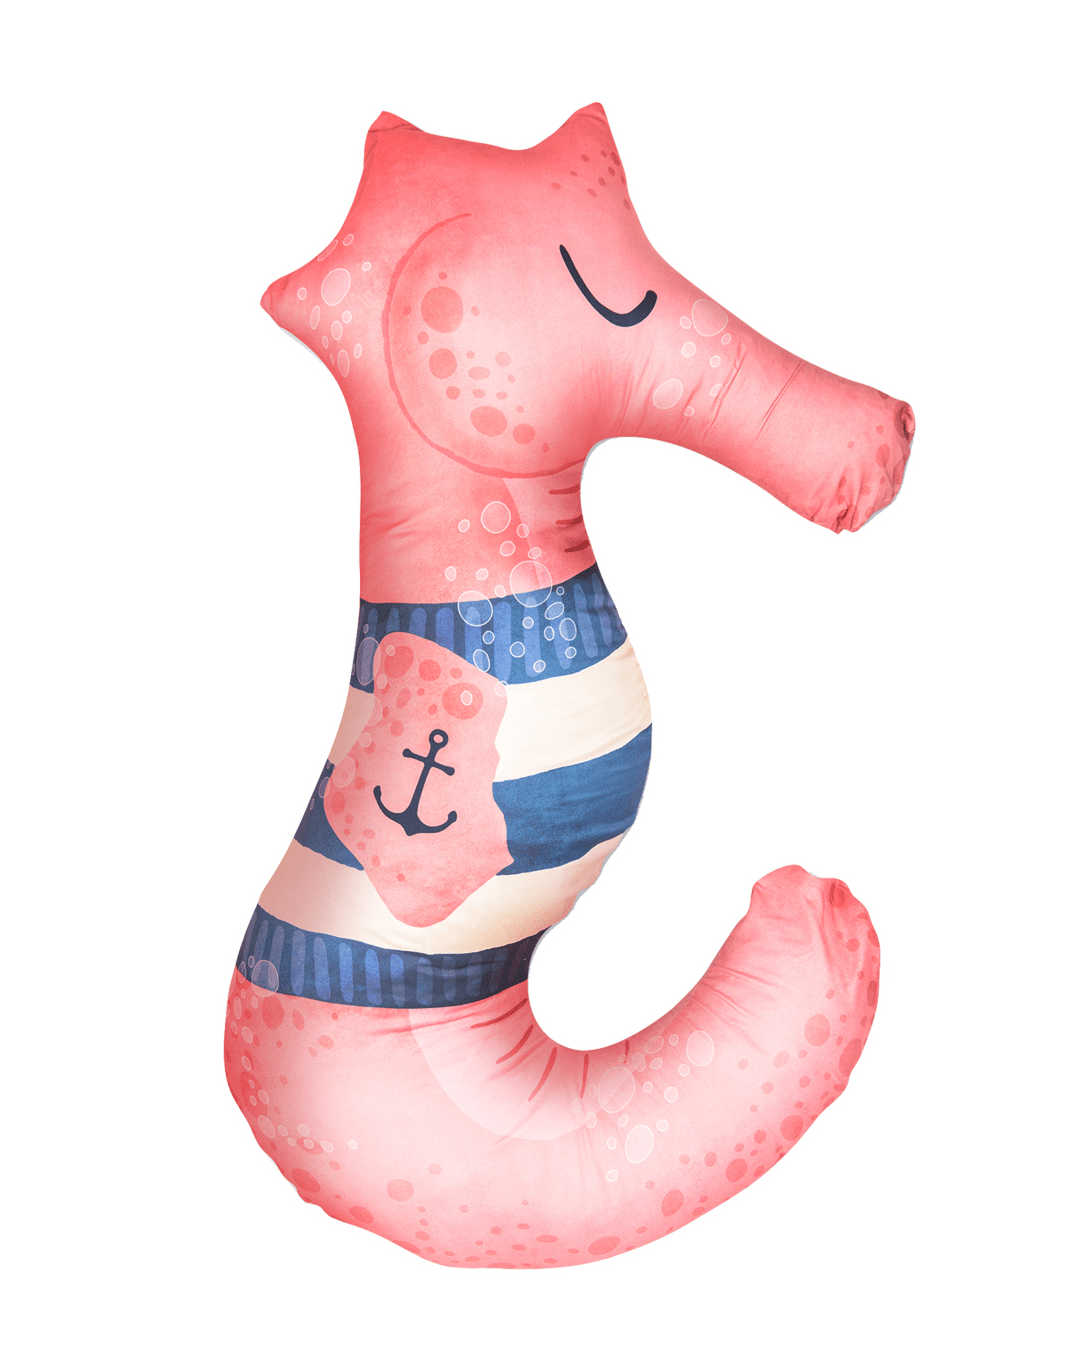 Seahorse Maternity Cushion | مخده فرس البحر  🌊 🎁